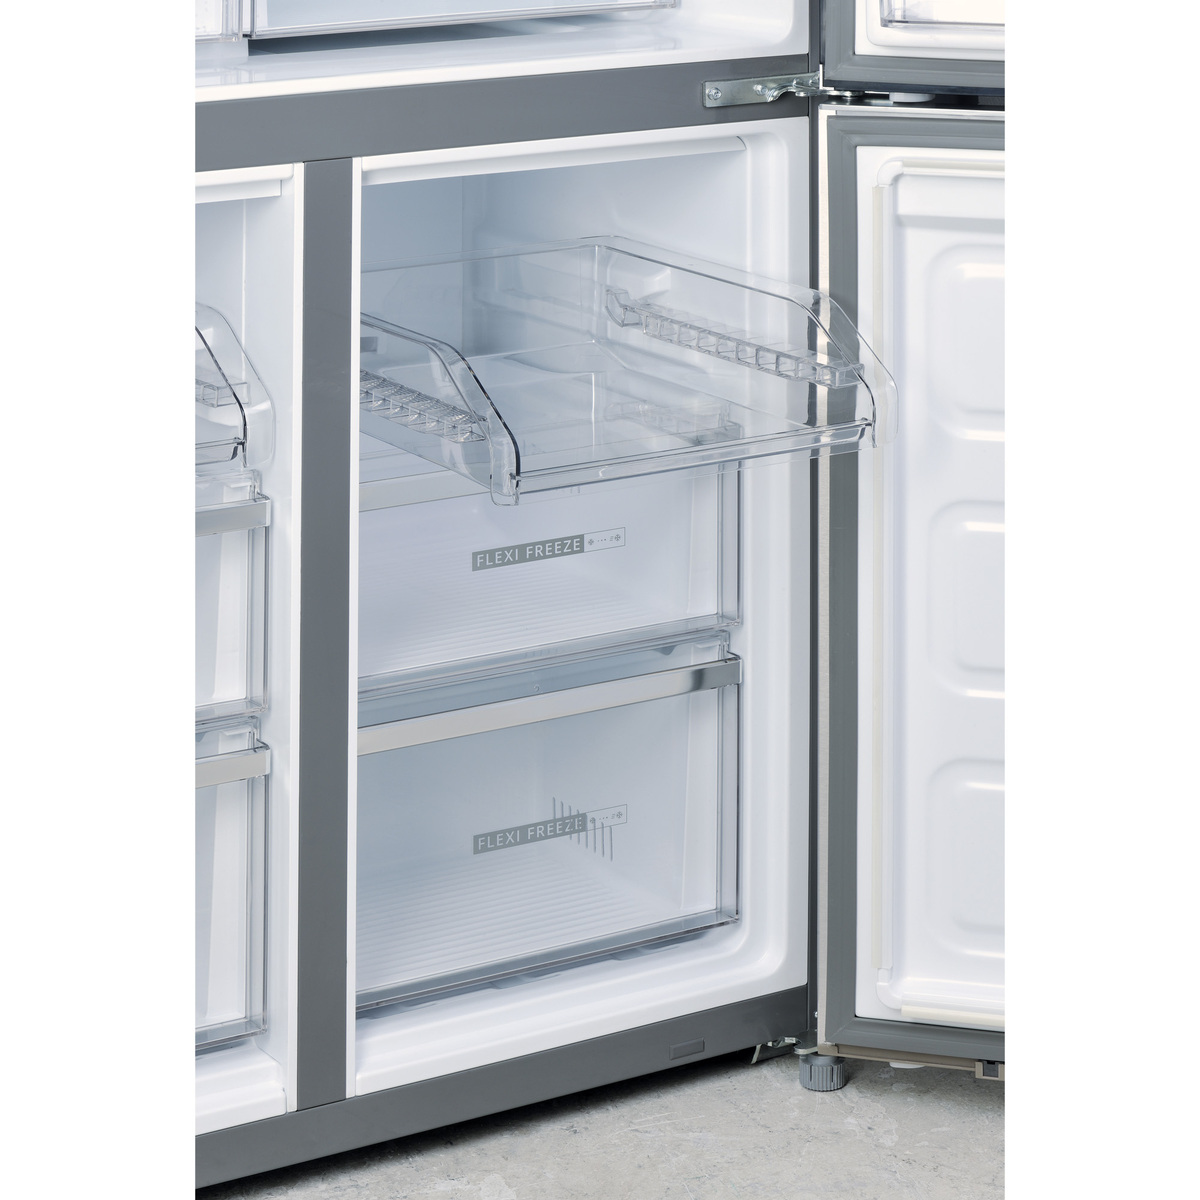 Whirlpool French Door Refrigerator, 591 L, Inox, WQ9B1LUK